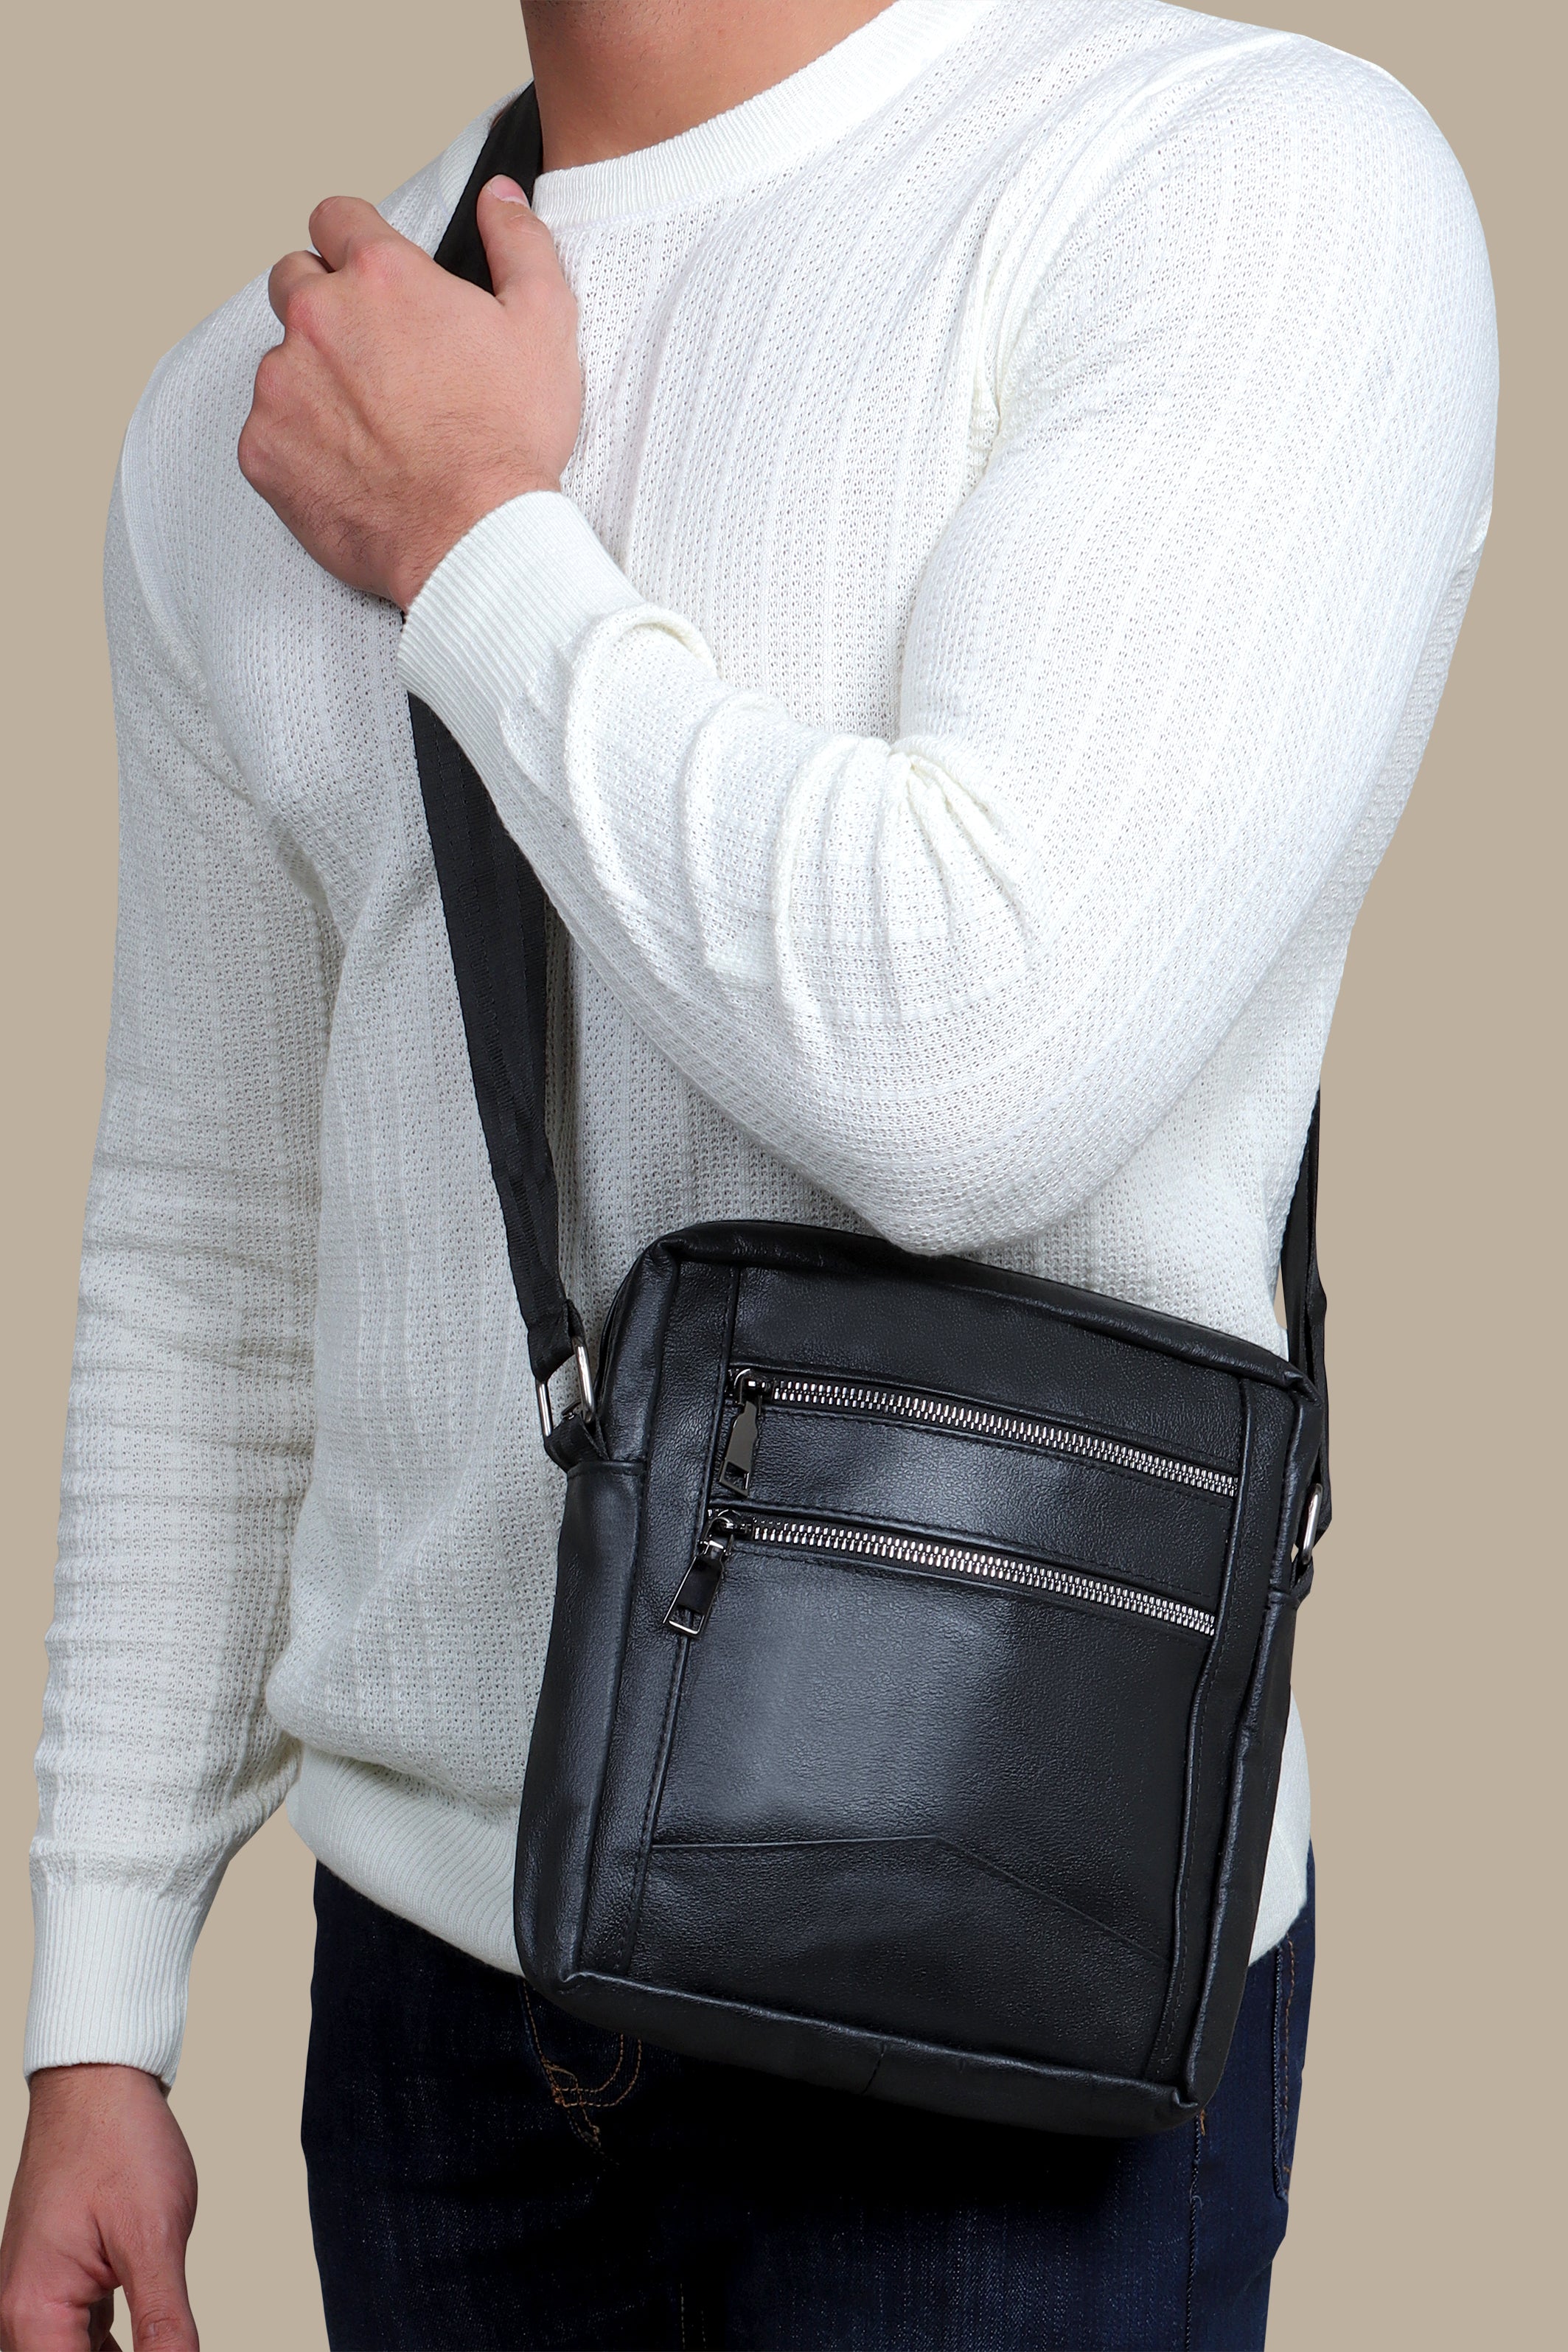 Triple Noir: Sleek Cross Bag with Three Black Zippers